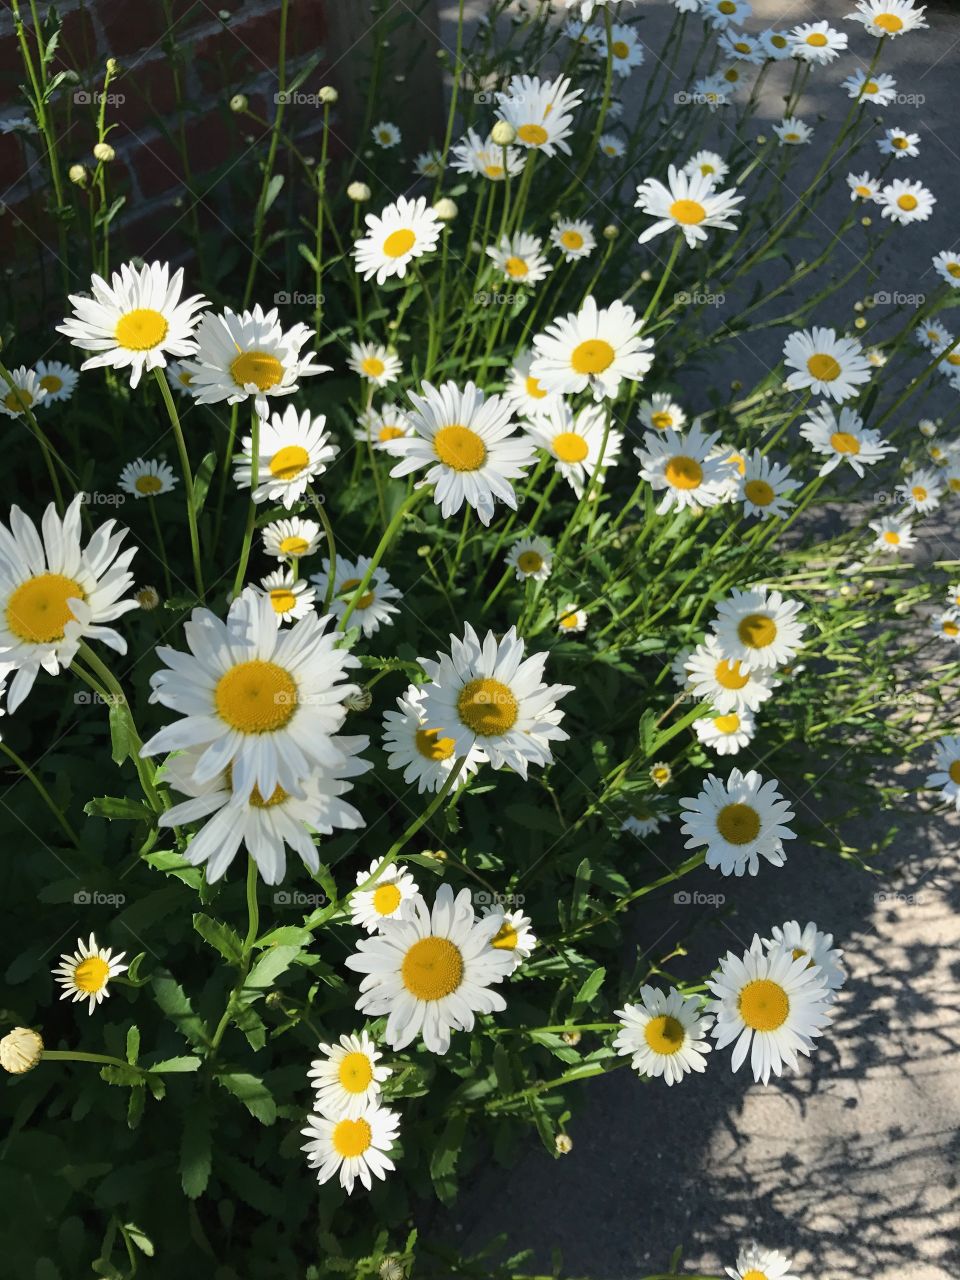 Pretty daisies in Spring at the Lauritzen Gardens in Omaha, Nebraska